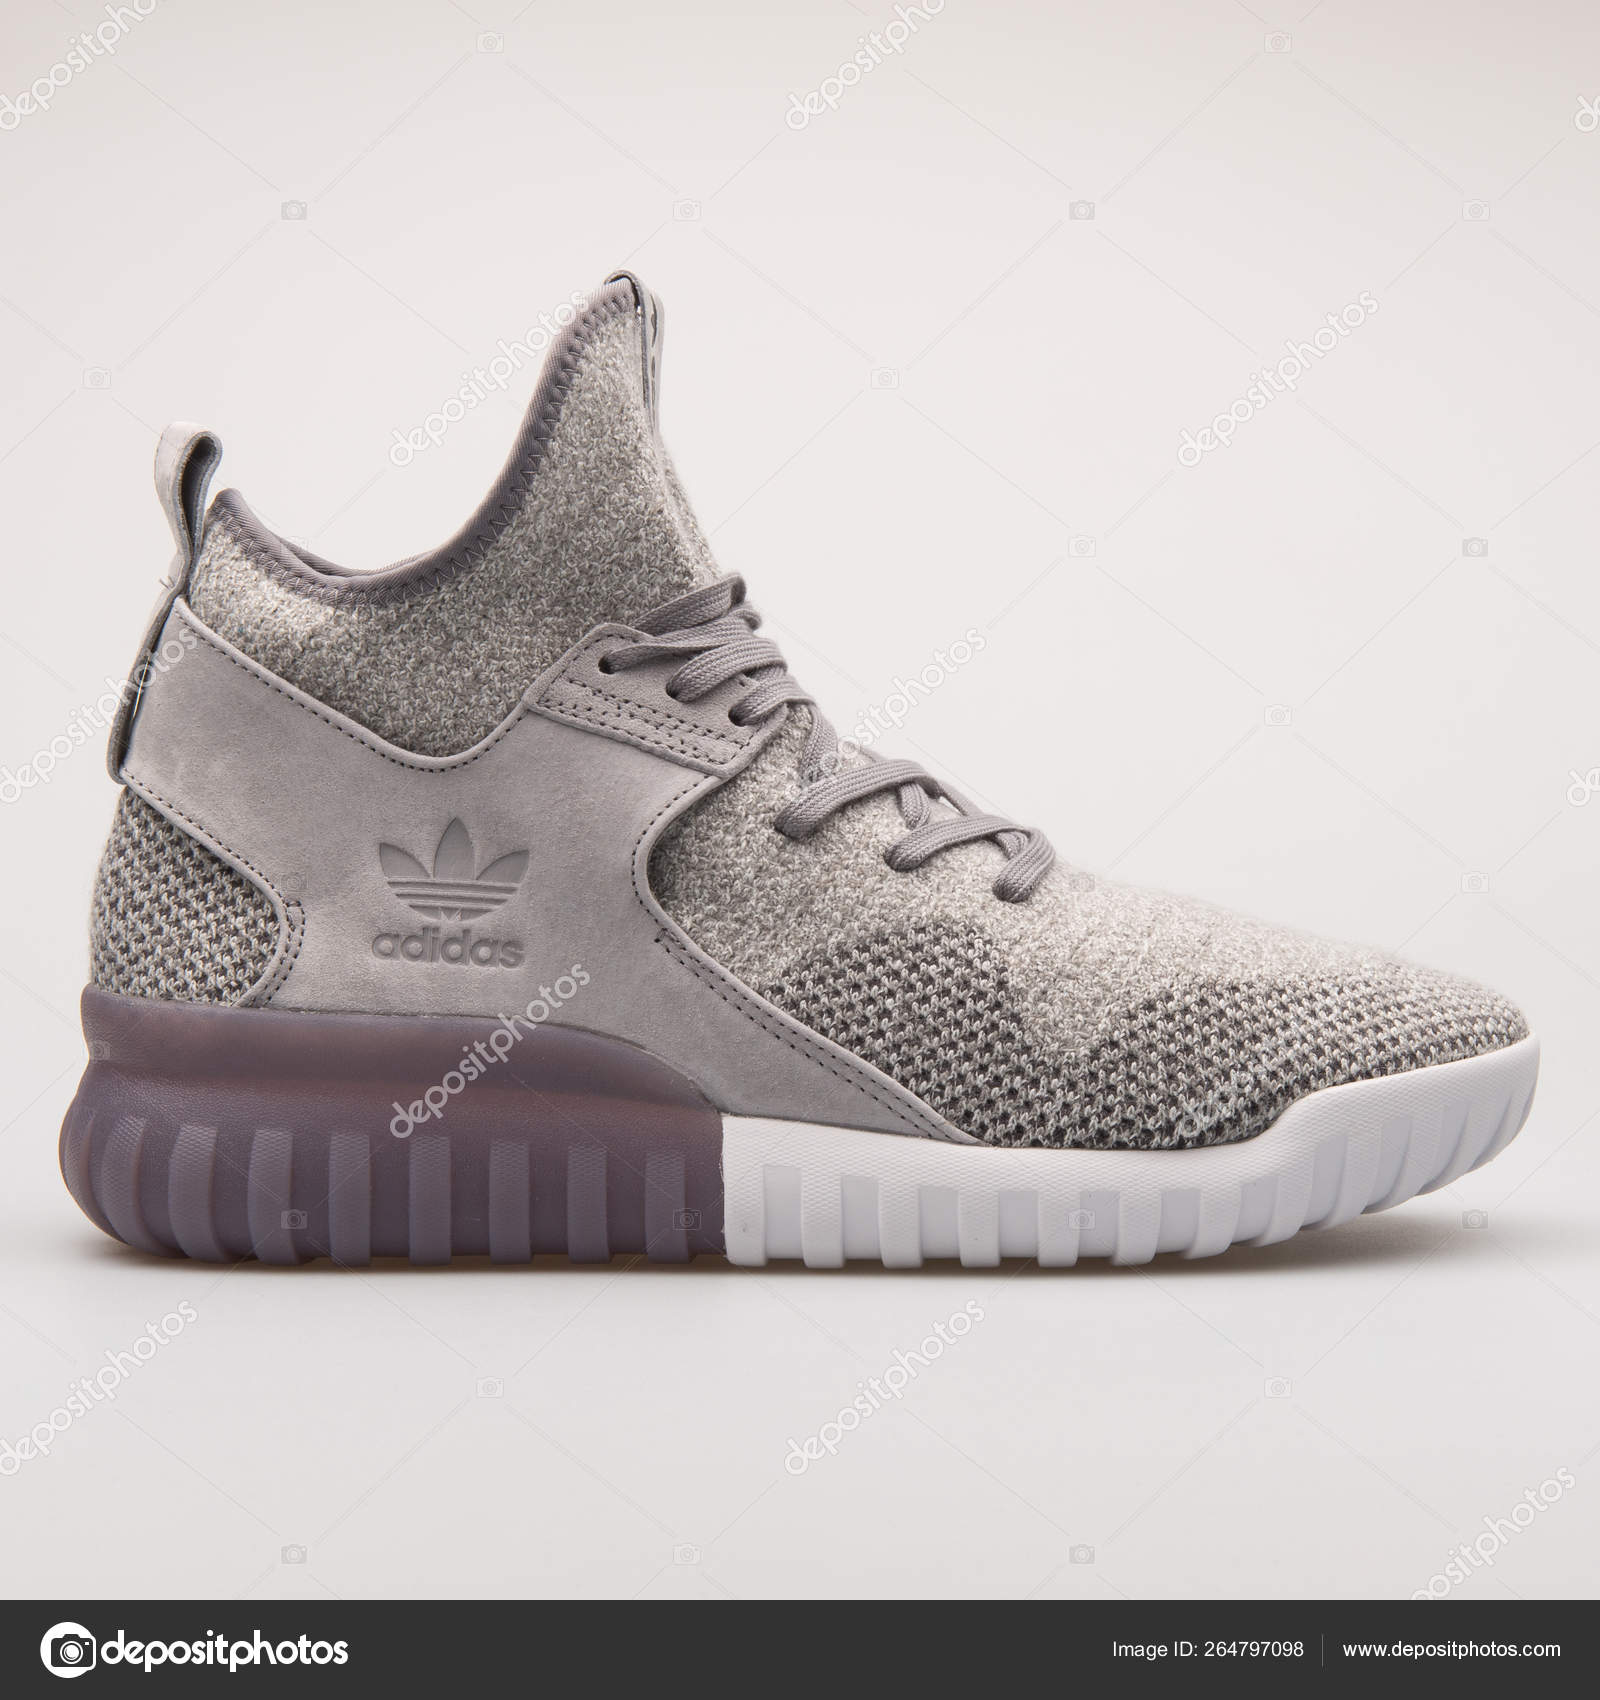 Adidas Tubular X PK grey sneaker 